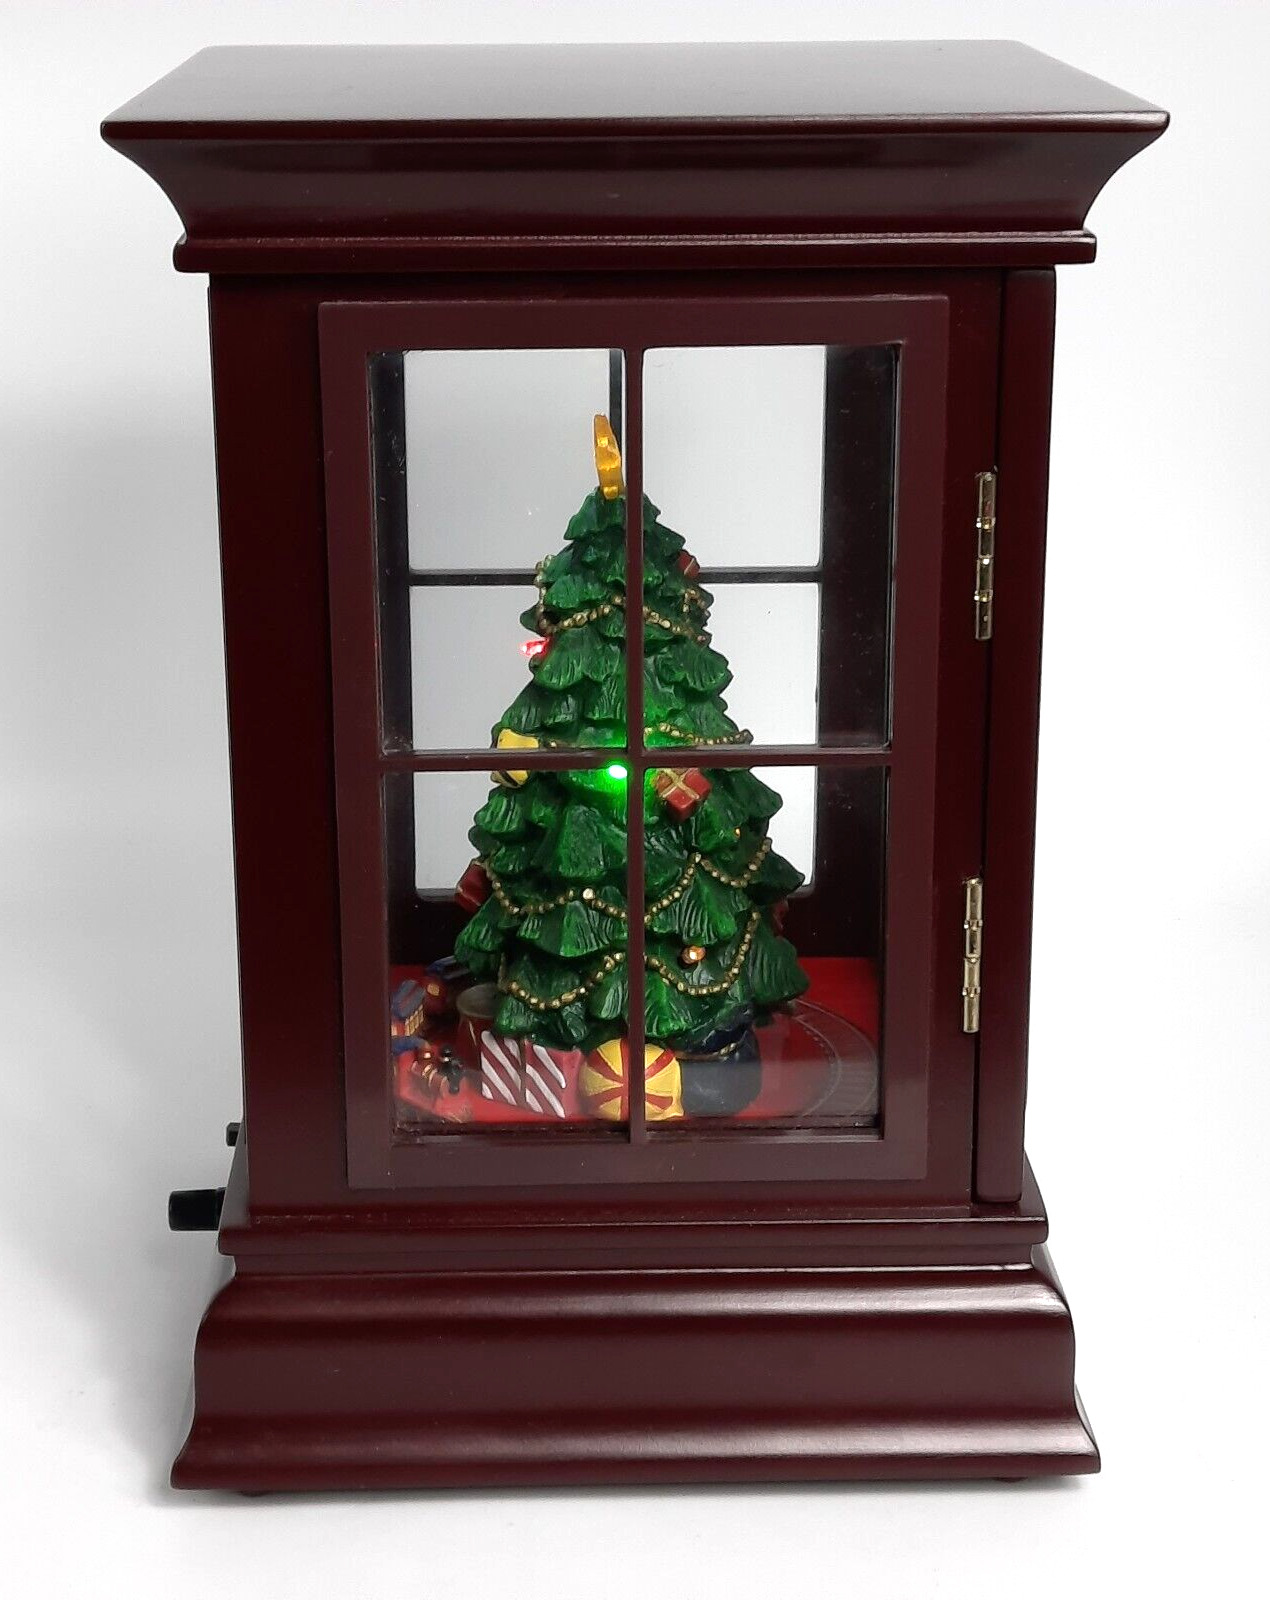 Mr Christmas 2009 Musical Animated Lighted Christmas Tree Curio Cabinet with Box